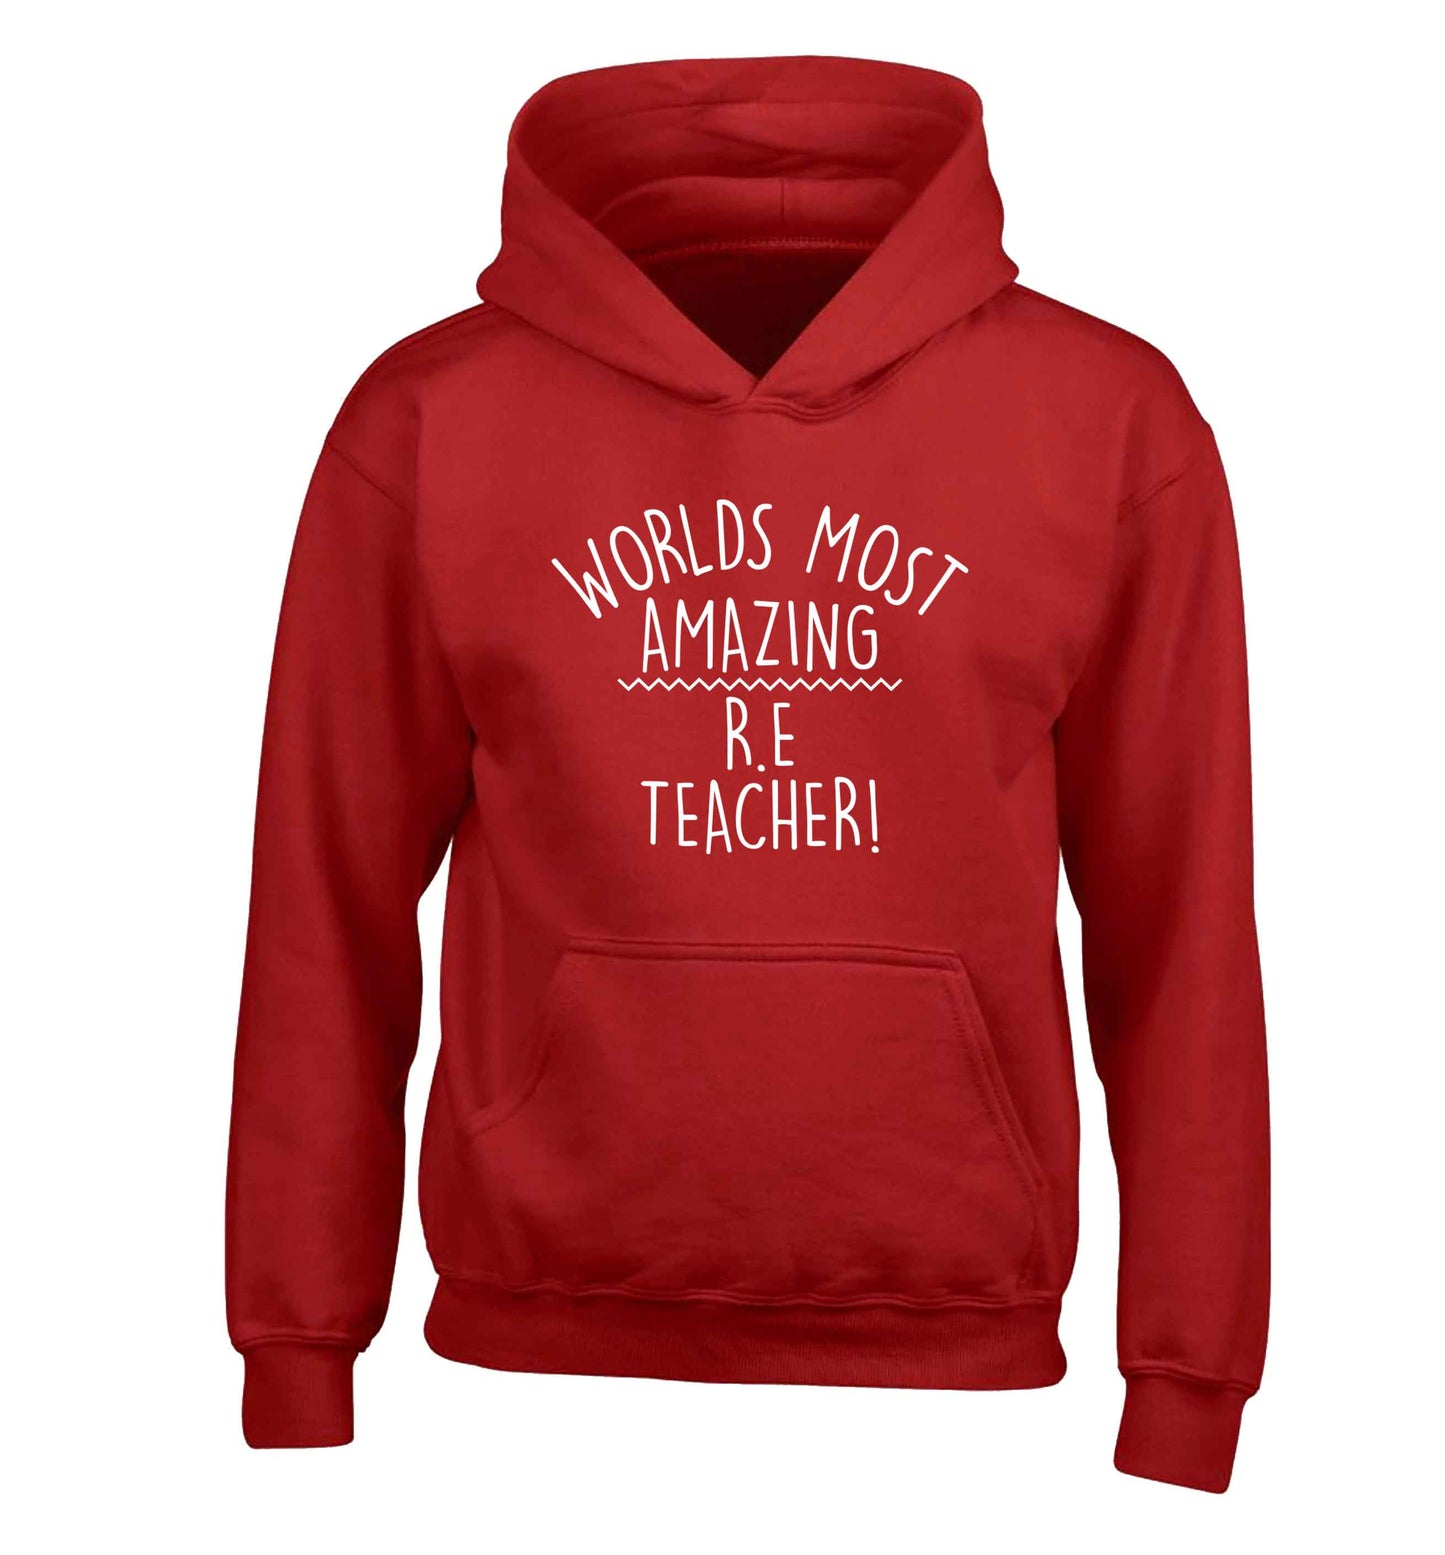 Worlds most amazing R.E teacher children's red hoodie 12-13 Years